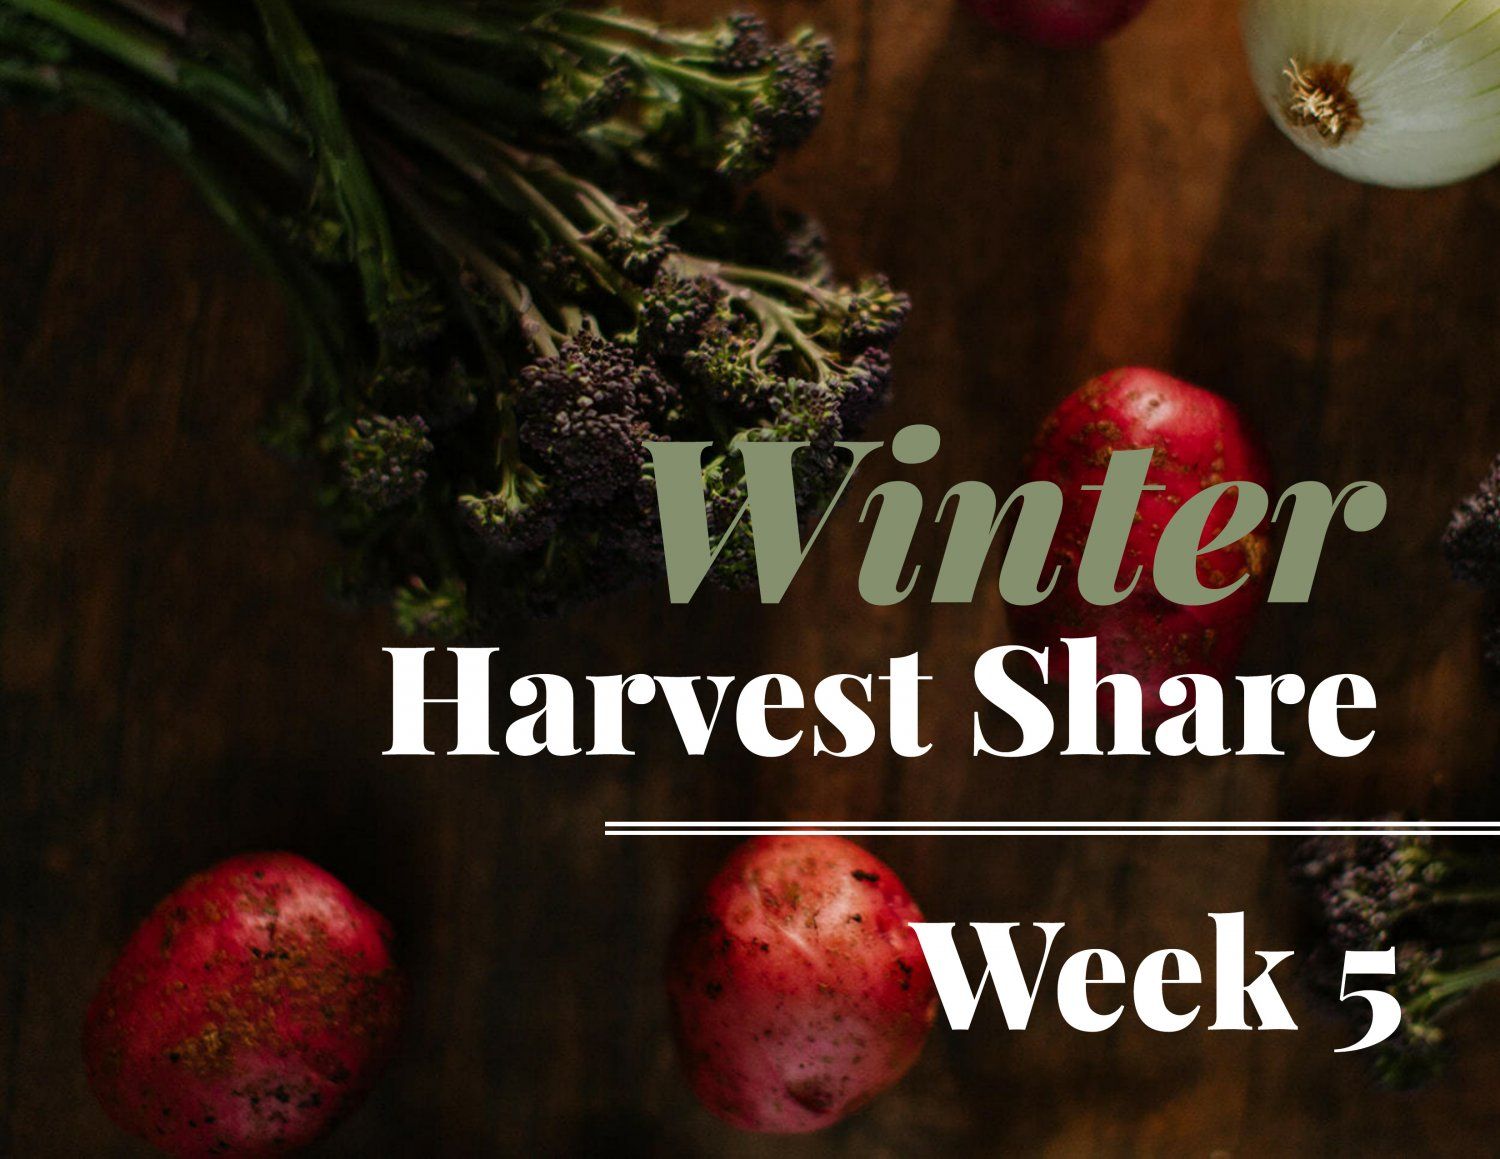 Next Happening: Winter Harvest Share - Week 5